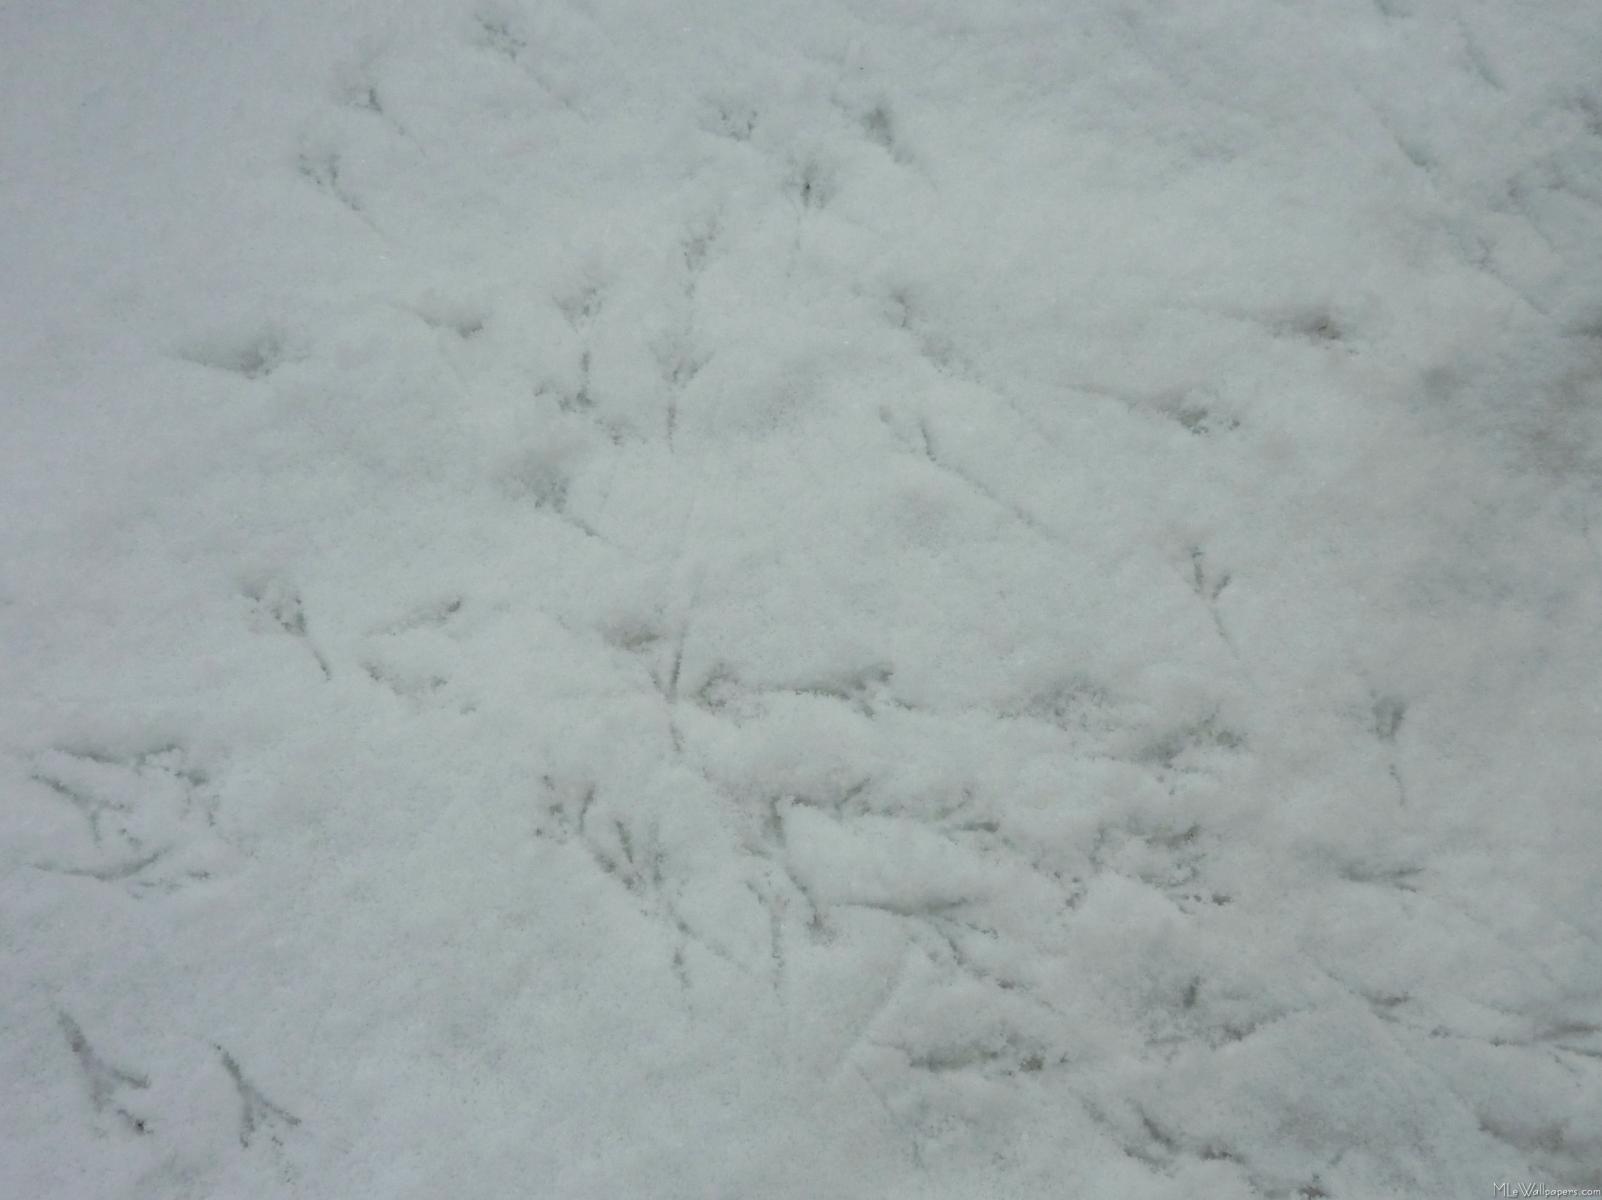 Bird Prints In Snow